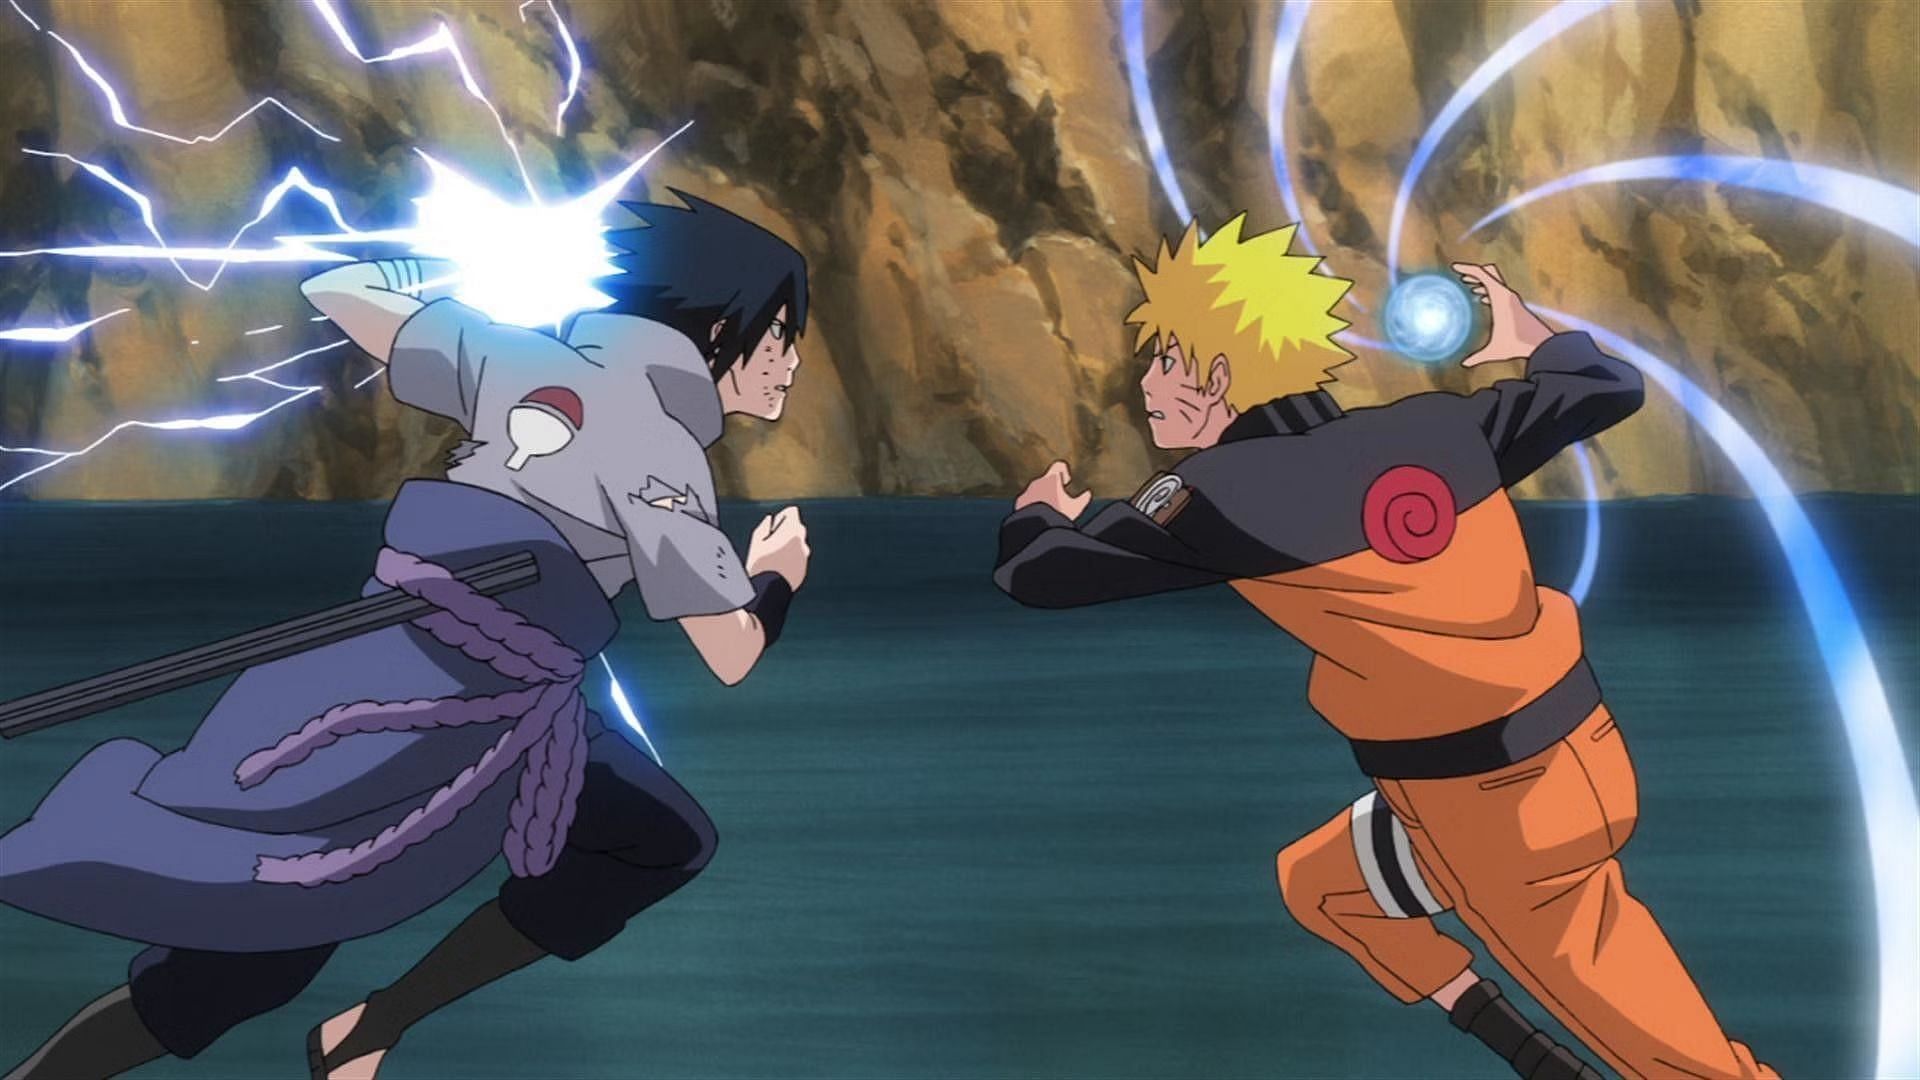 Naruto vs Sasuke as seen in the anime (image via Pierrot)